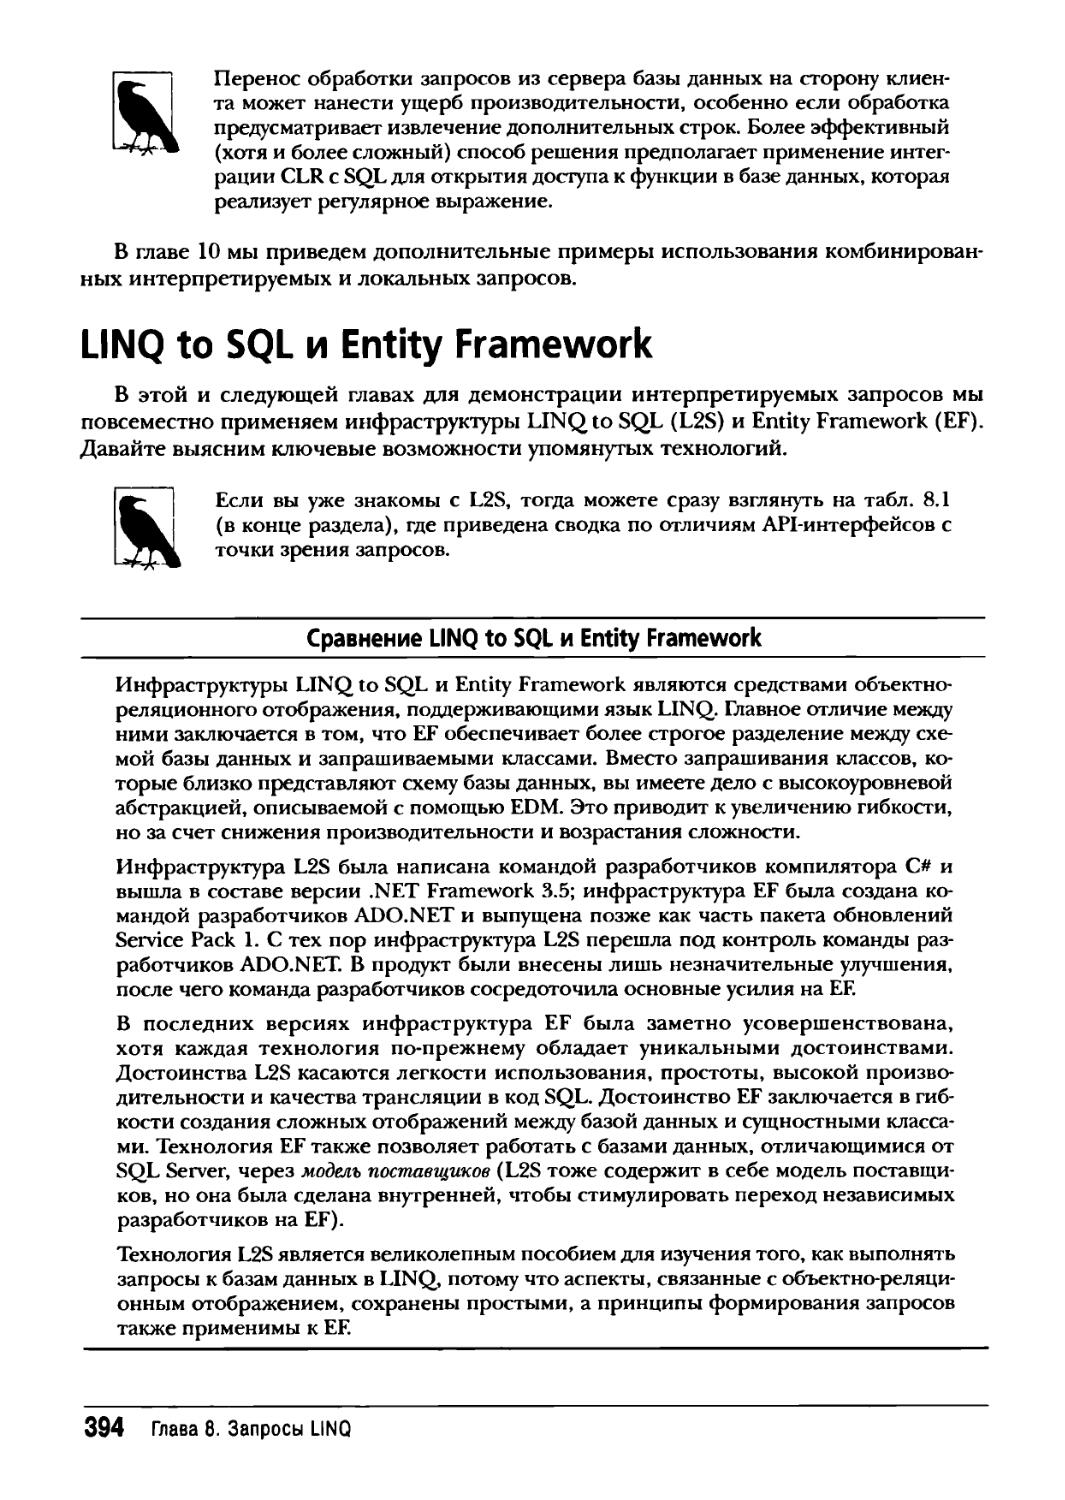 LINQ to SQL и Entity Framework